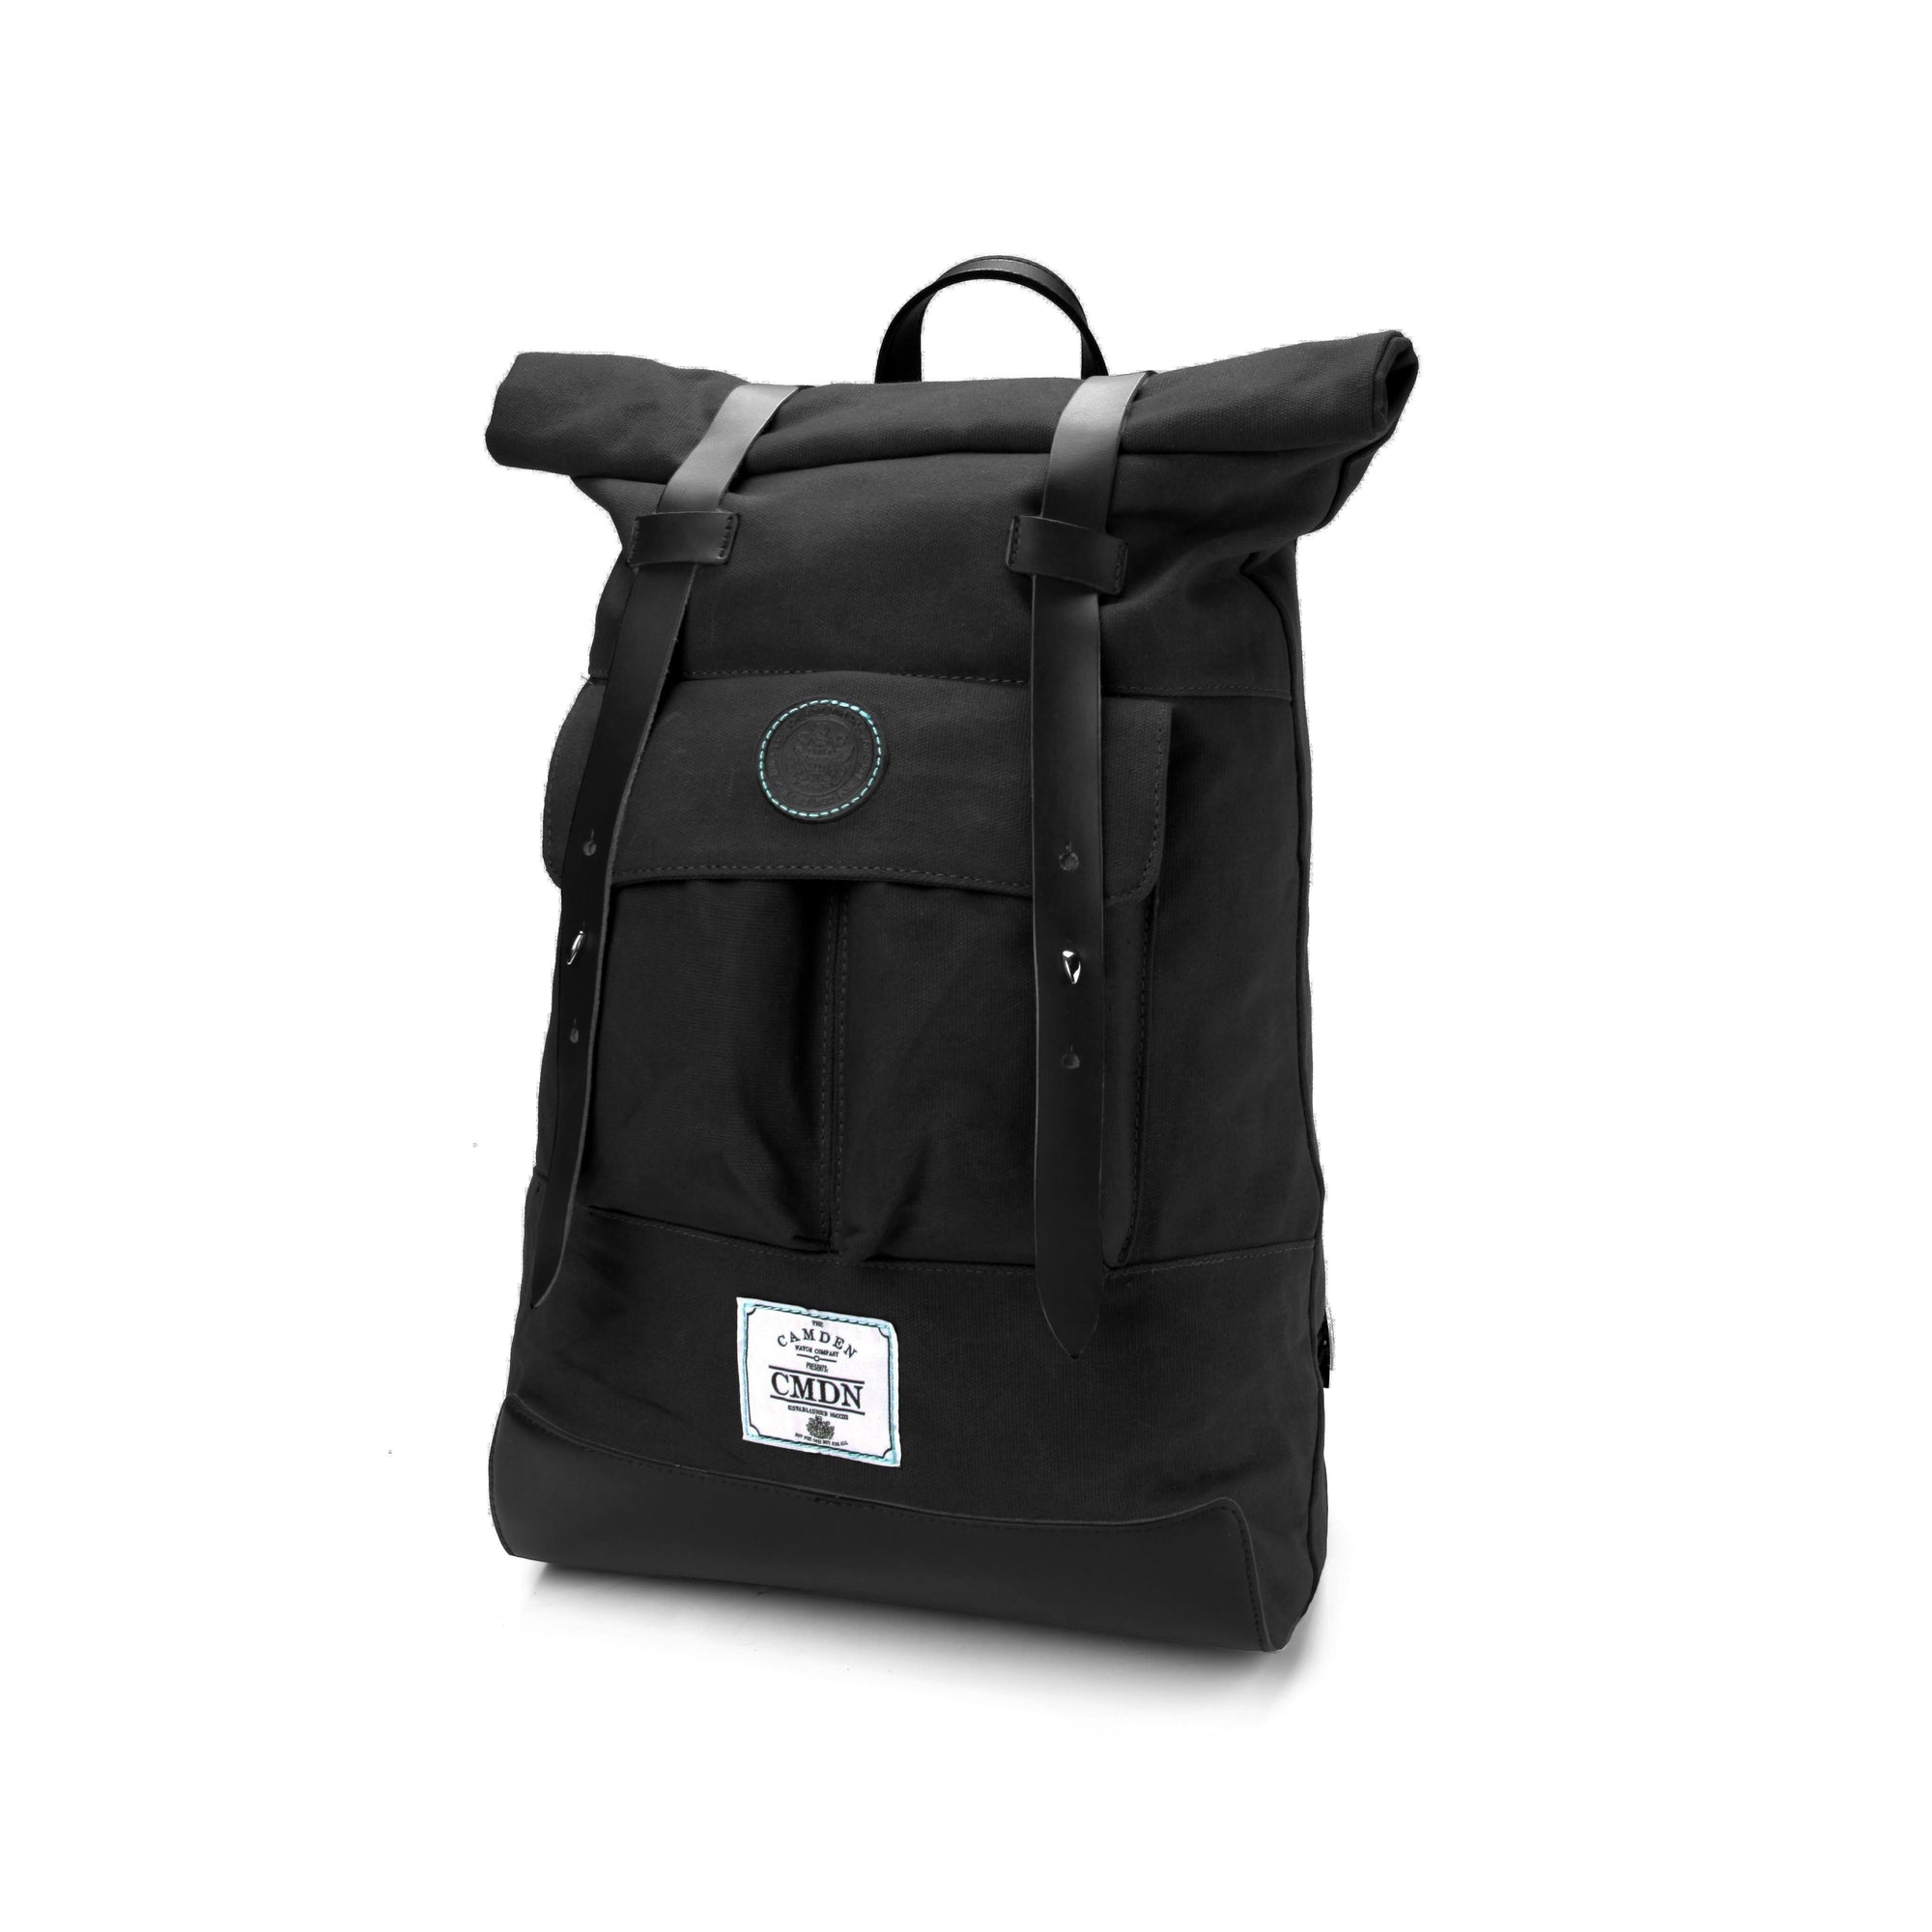 Backpack - Black Waxed Canvas Backpack